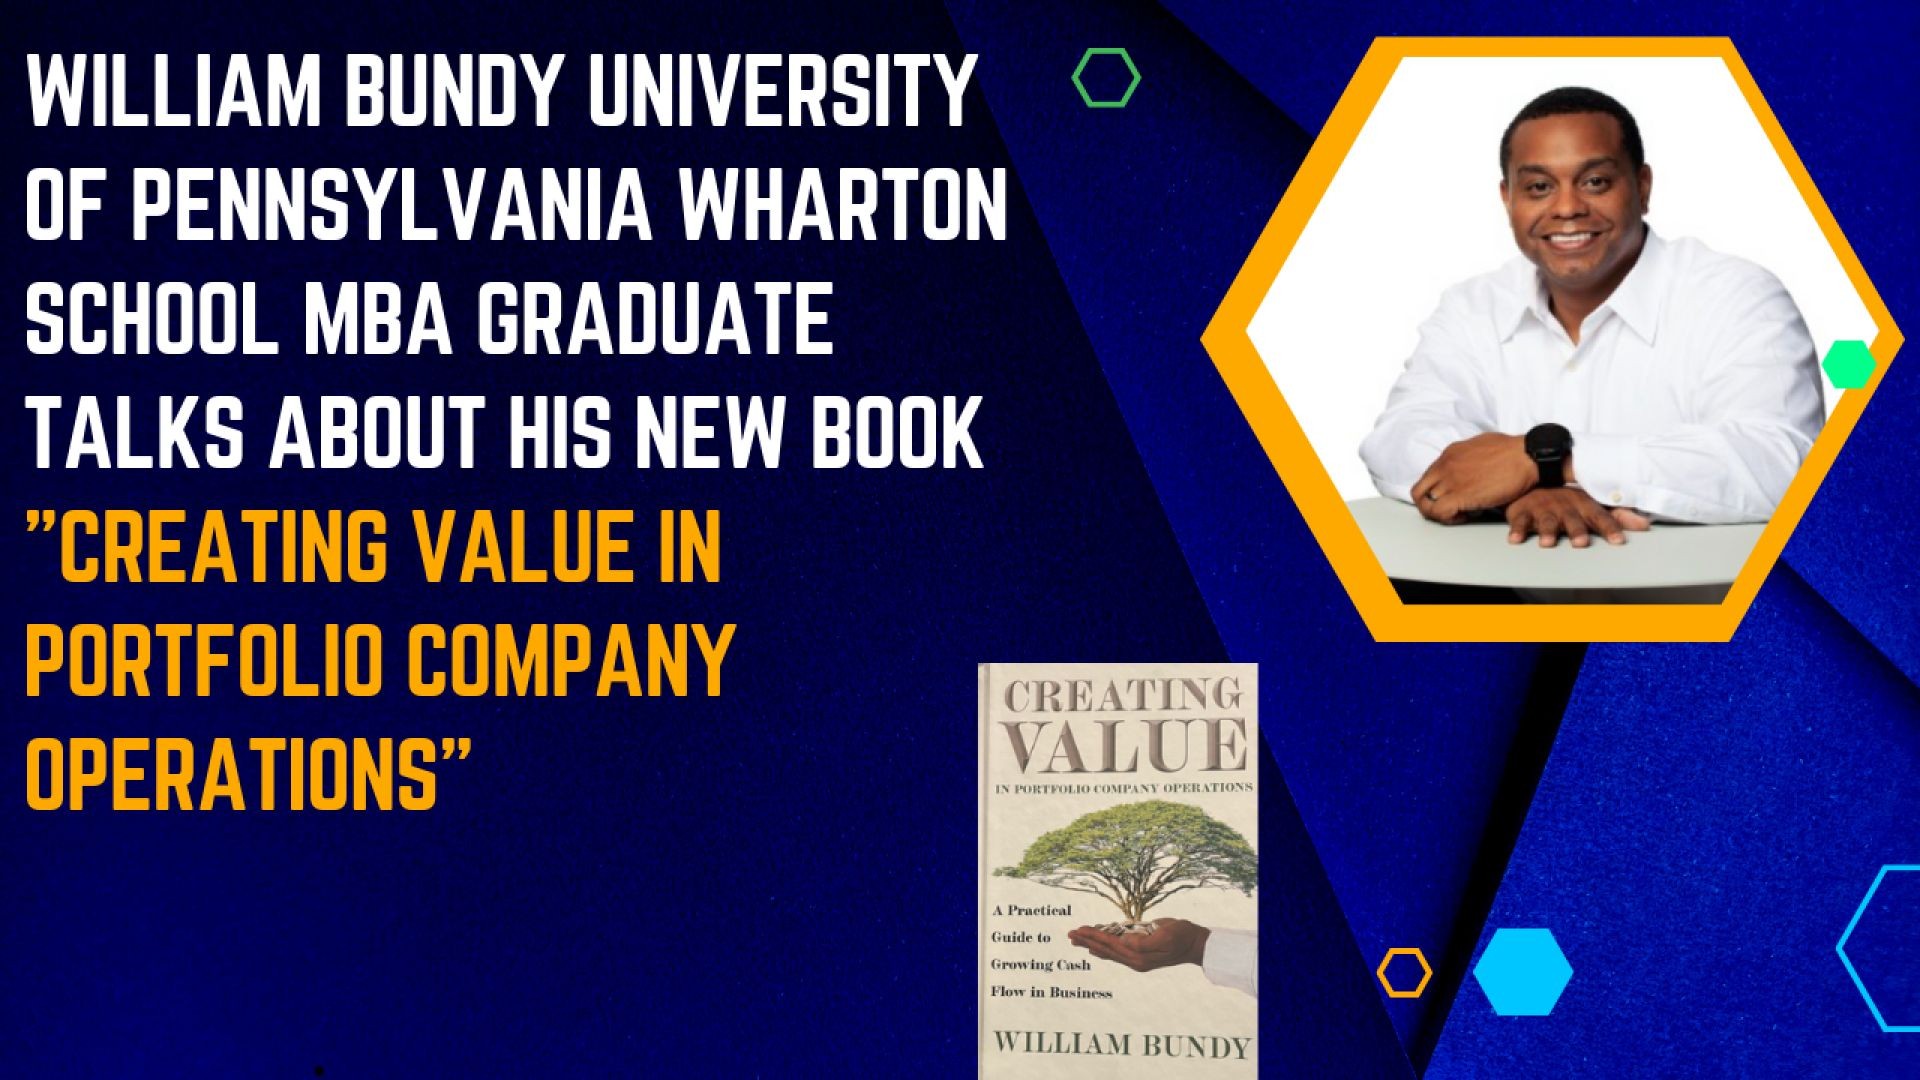 ⁣Wharton School MBA Graduate William Bundy Shows His New Private Equity Book